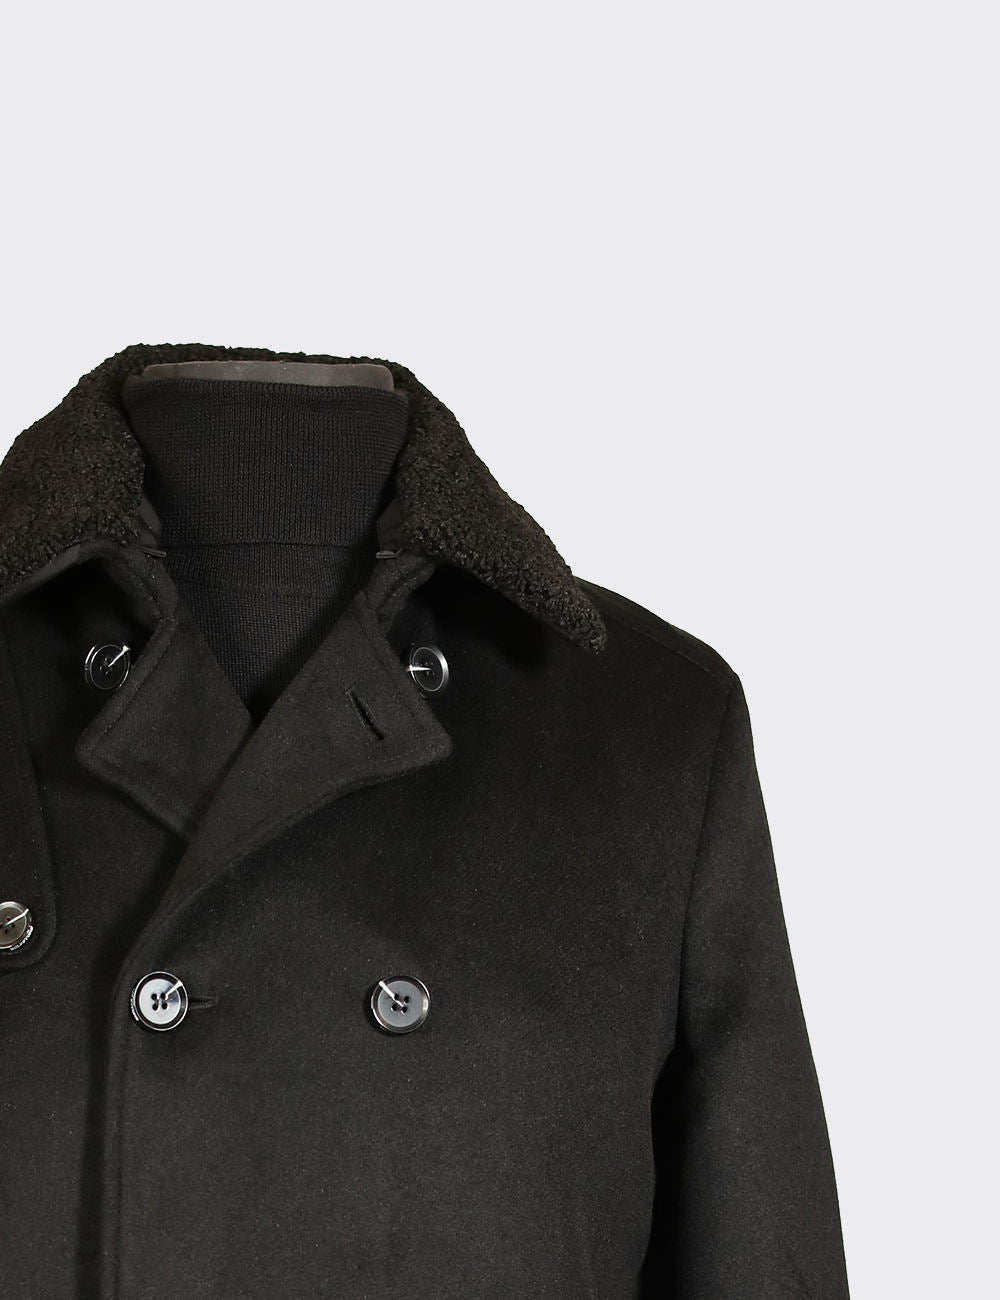 MILESTONE Double Breasted Wool Coat, Black